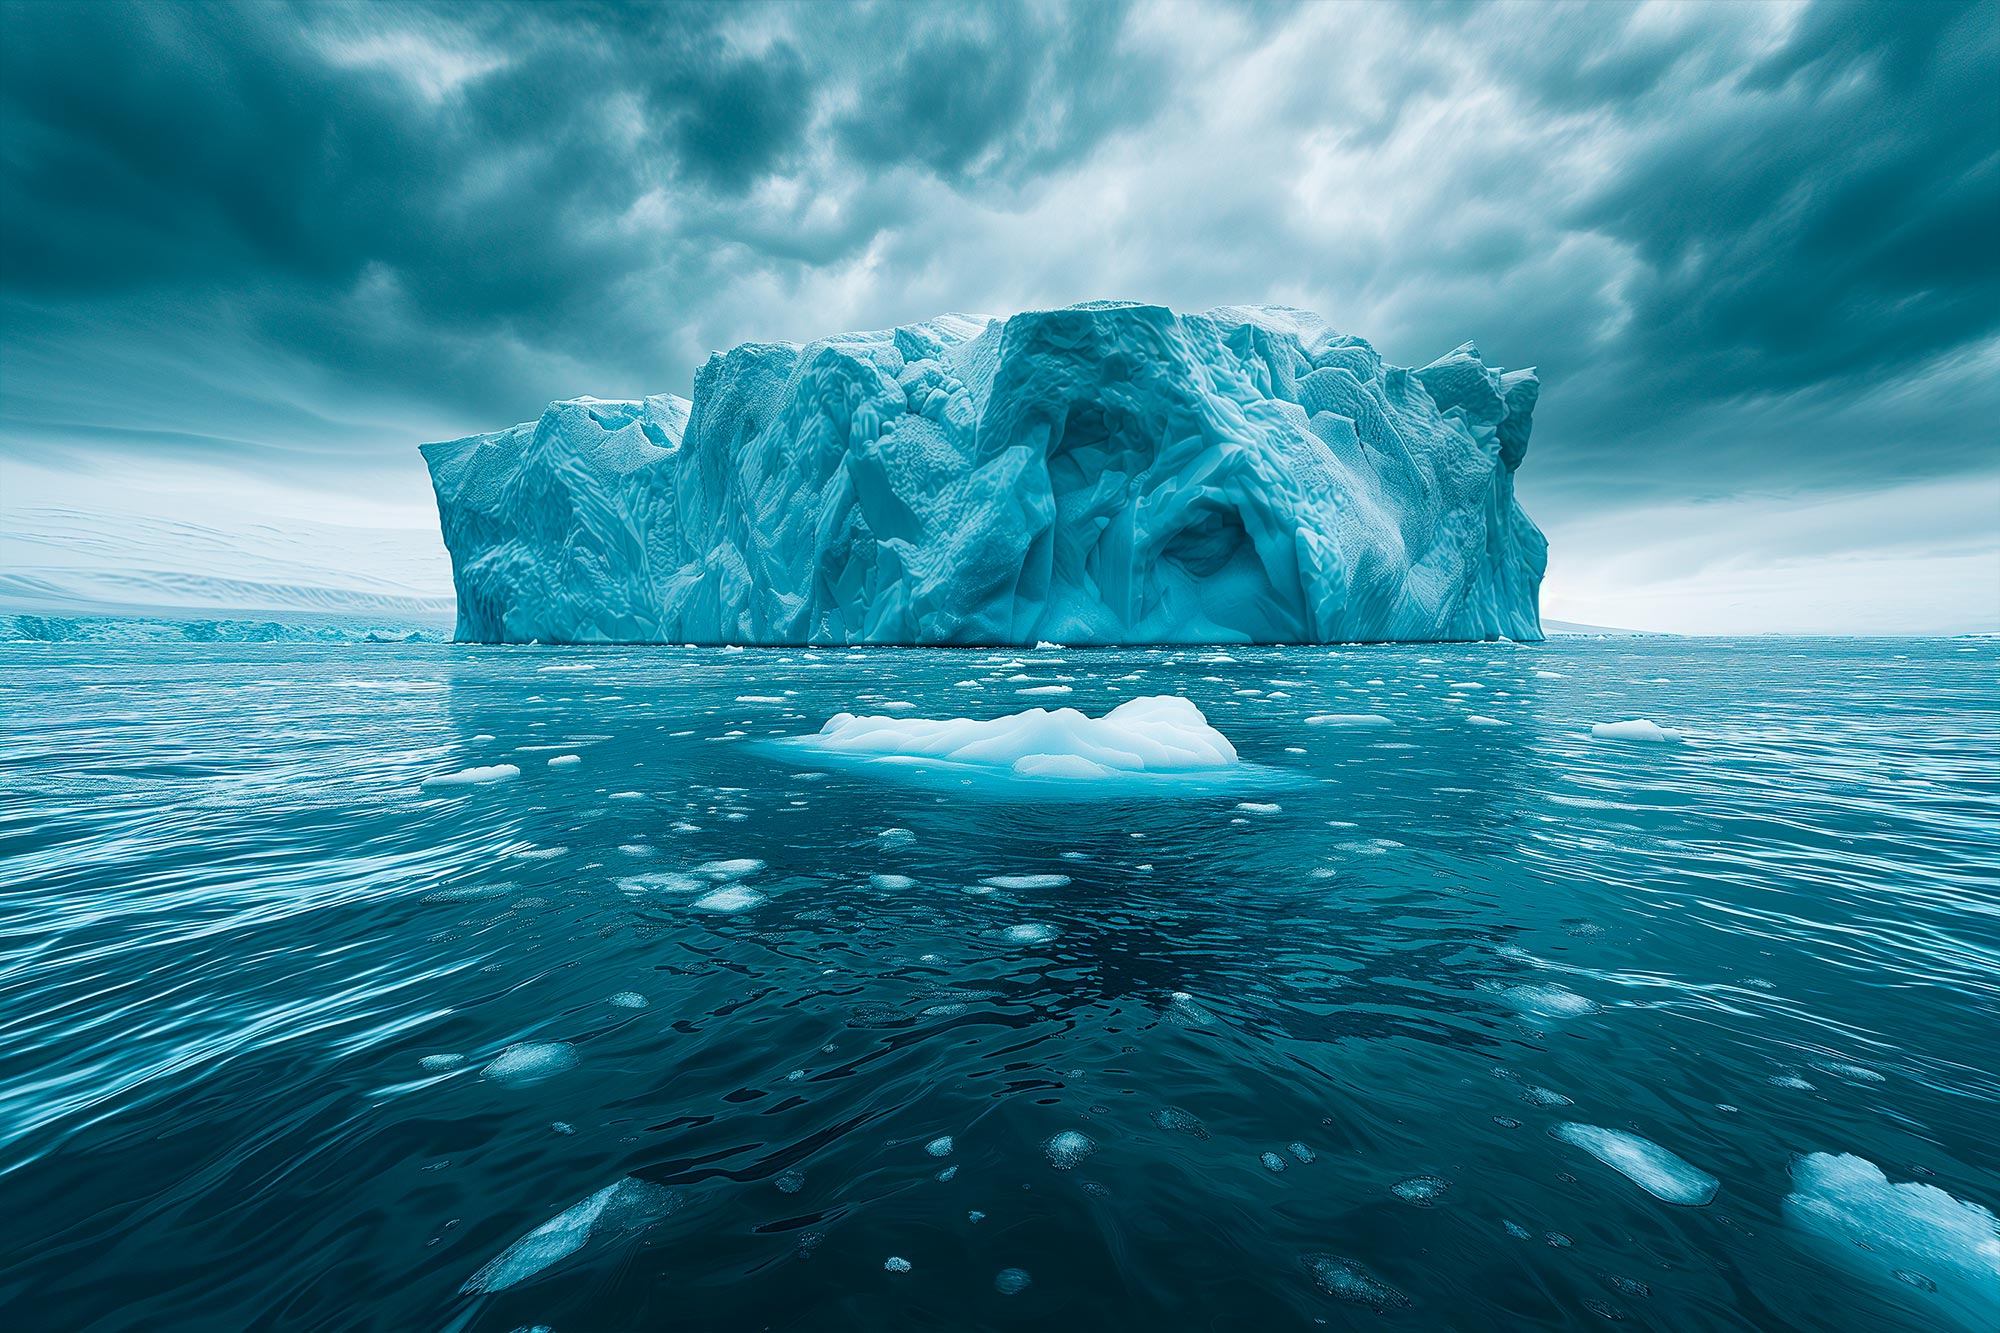 Melting Ice Climate Change Art Concept Illustration jpg